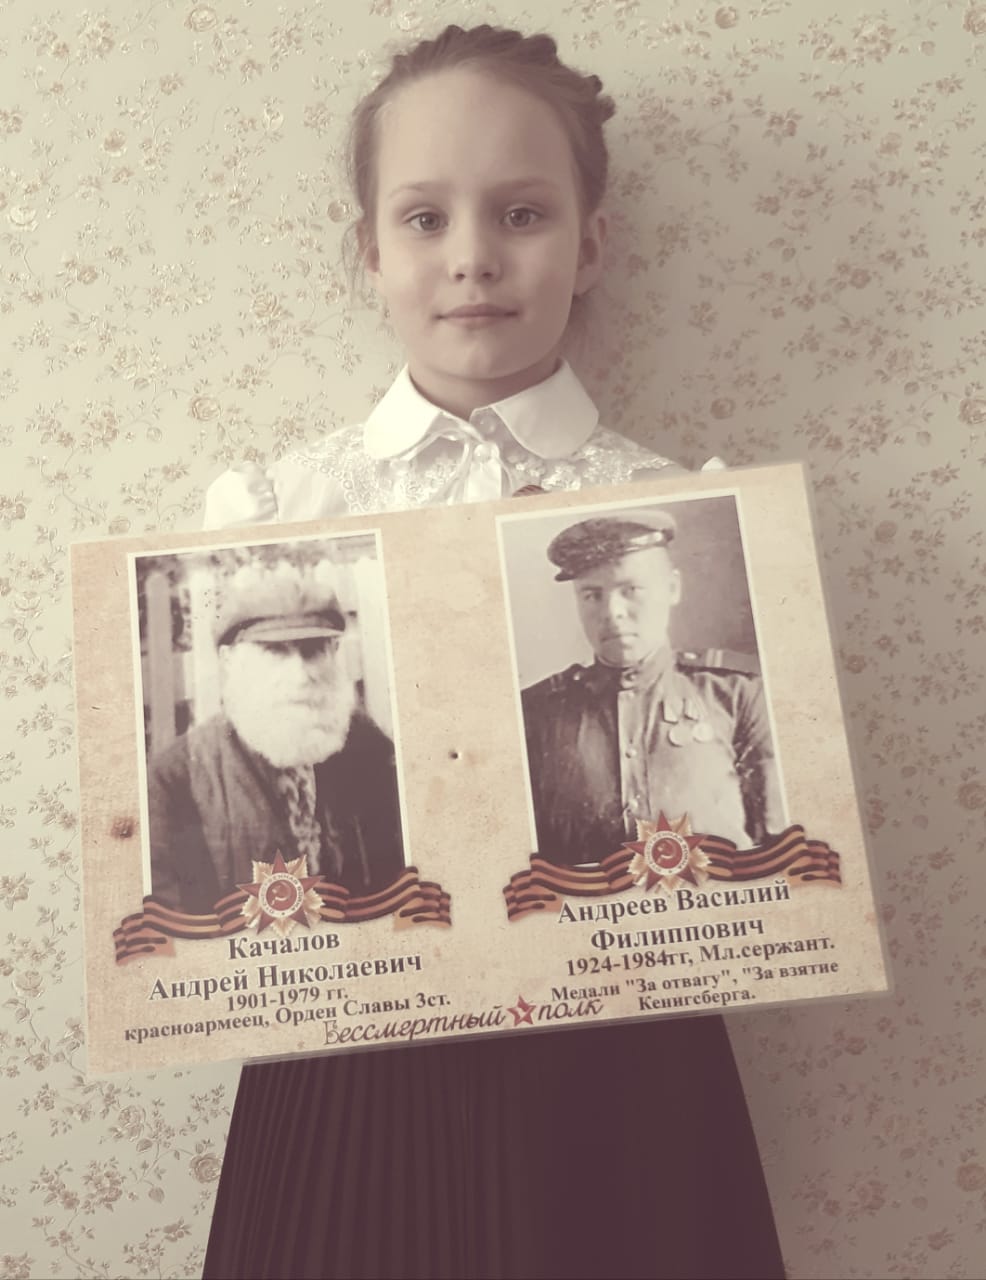 Коргина Ксения с портретом прадедушки